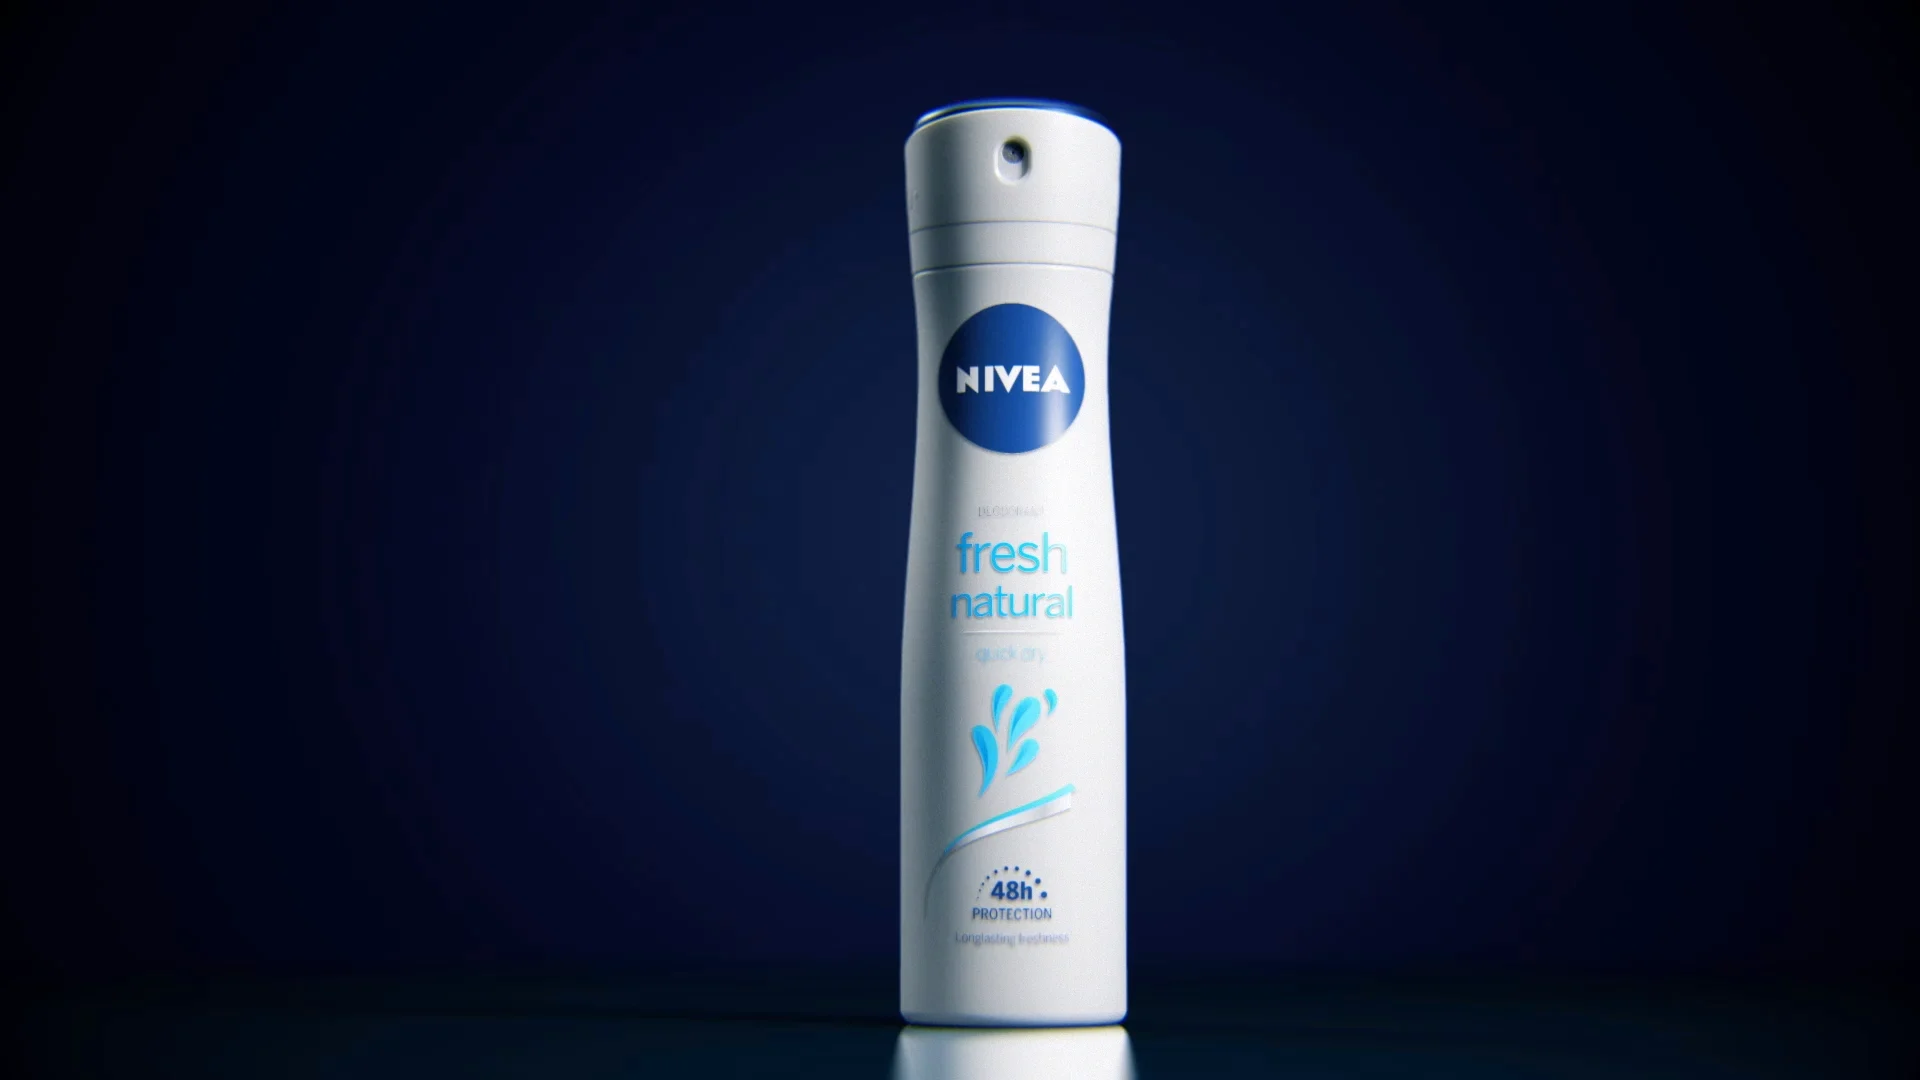 nivea fresh natural packshot. white aerosol bottle in front of dark blue background